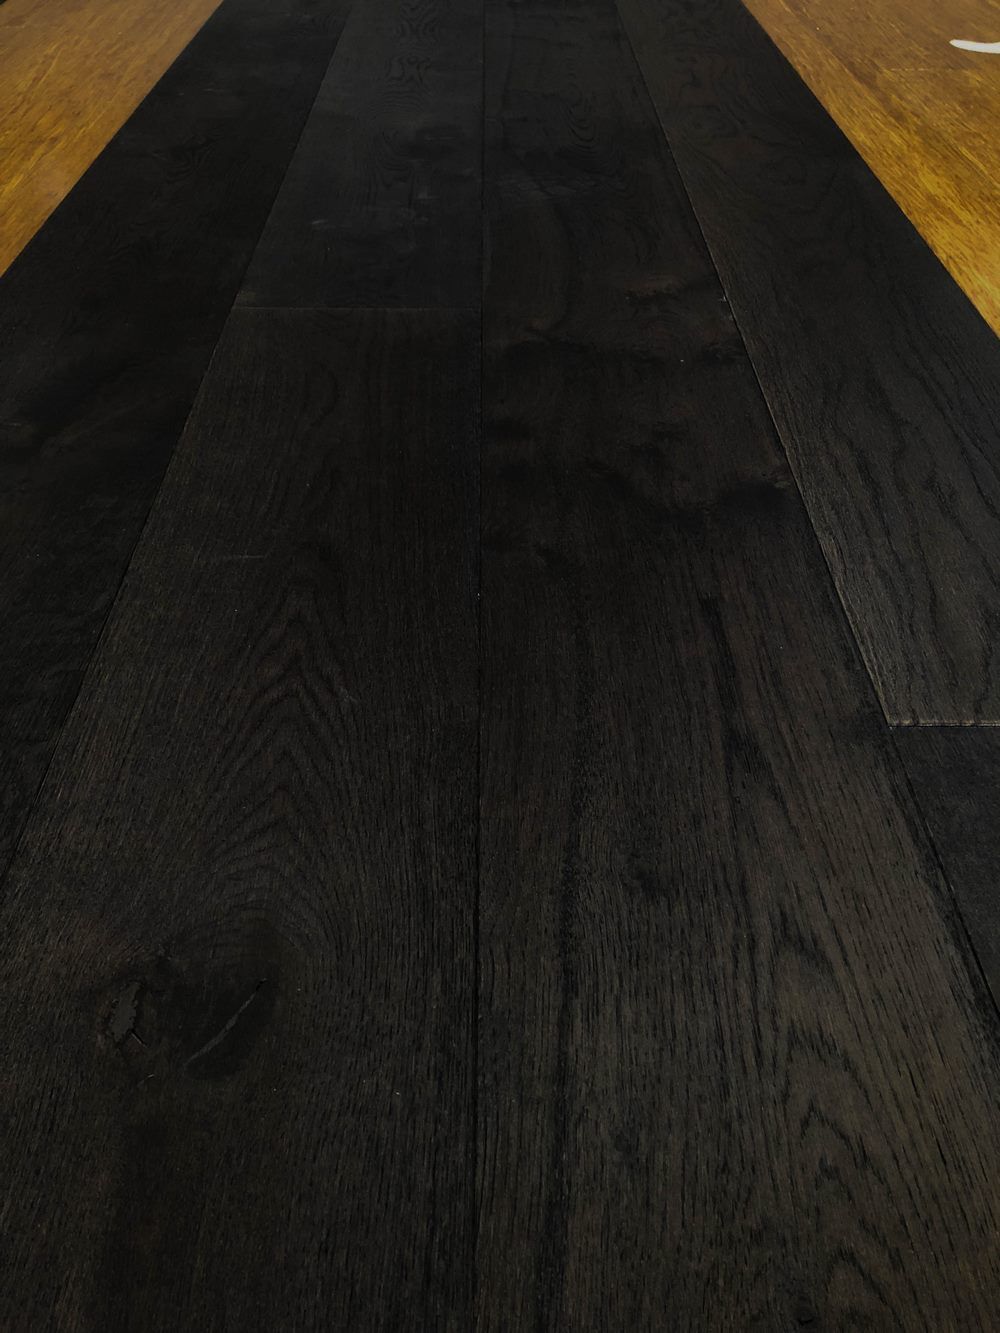 Black Oak Engineered Timber Flooring, Smoked Black Oak Wide Plank Hardwood Flooring